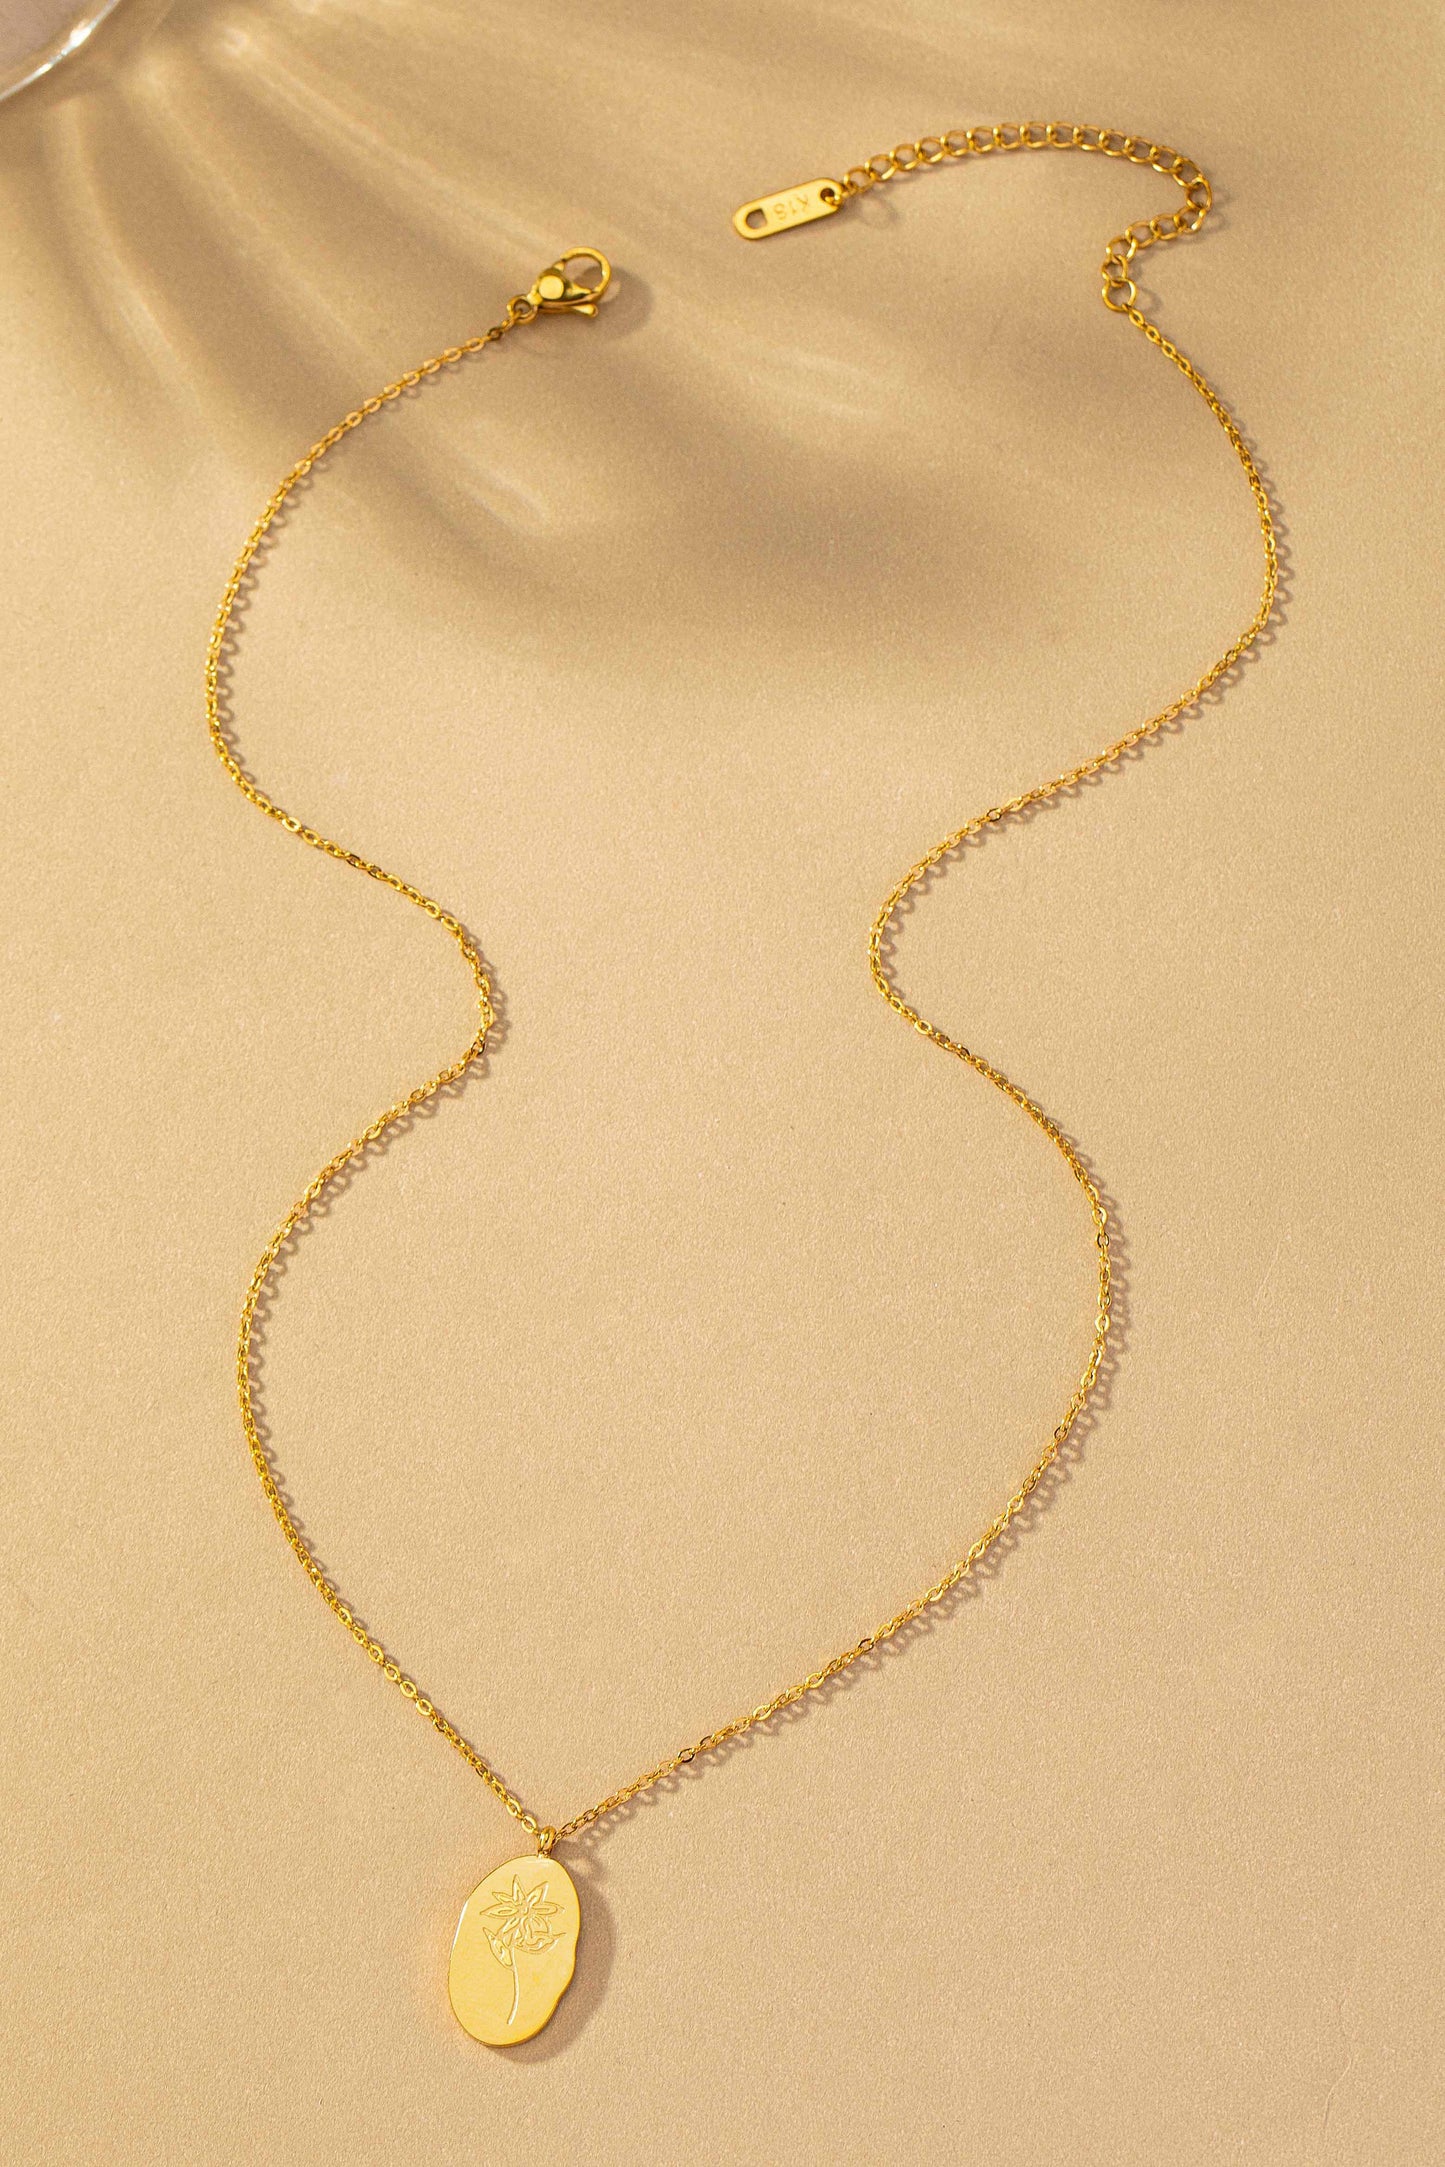 Birth Month Flower Pendant Necklace